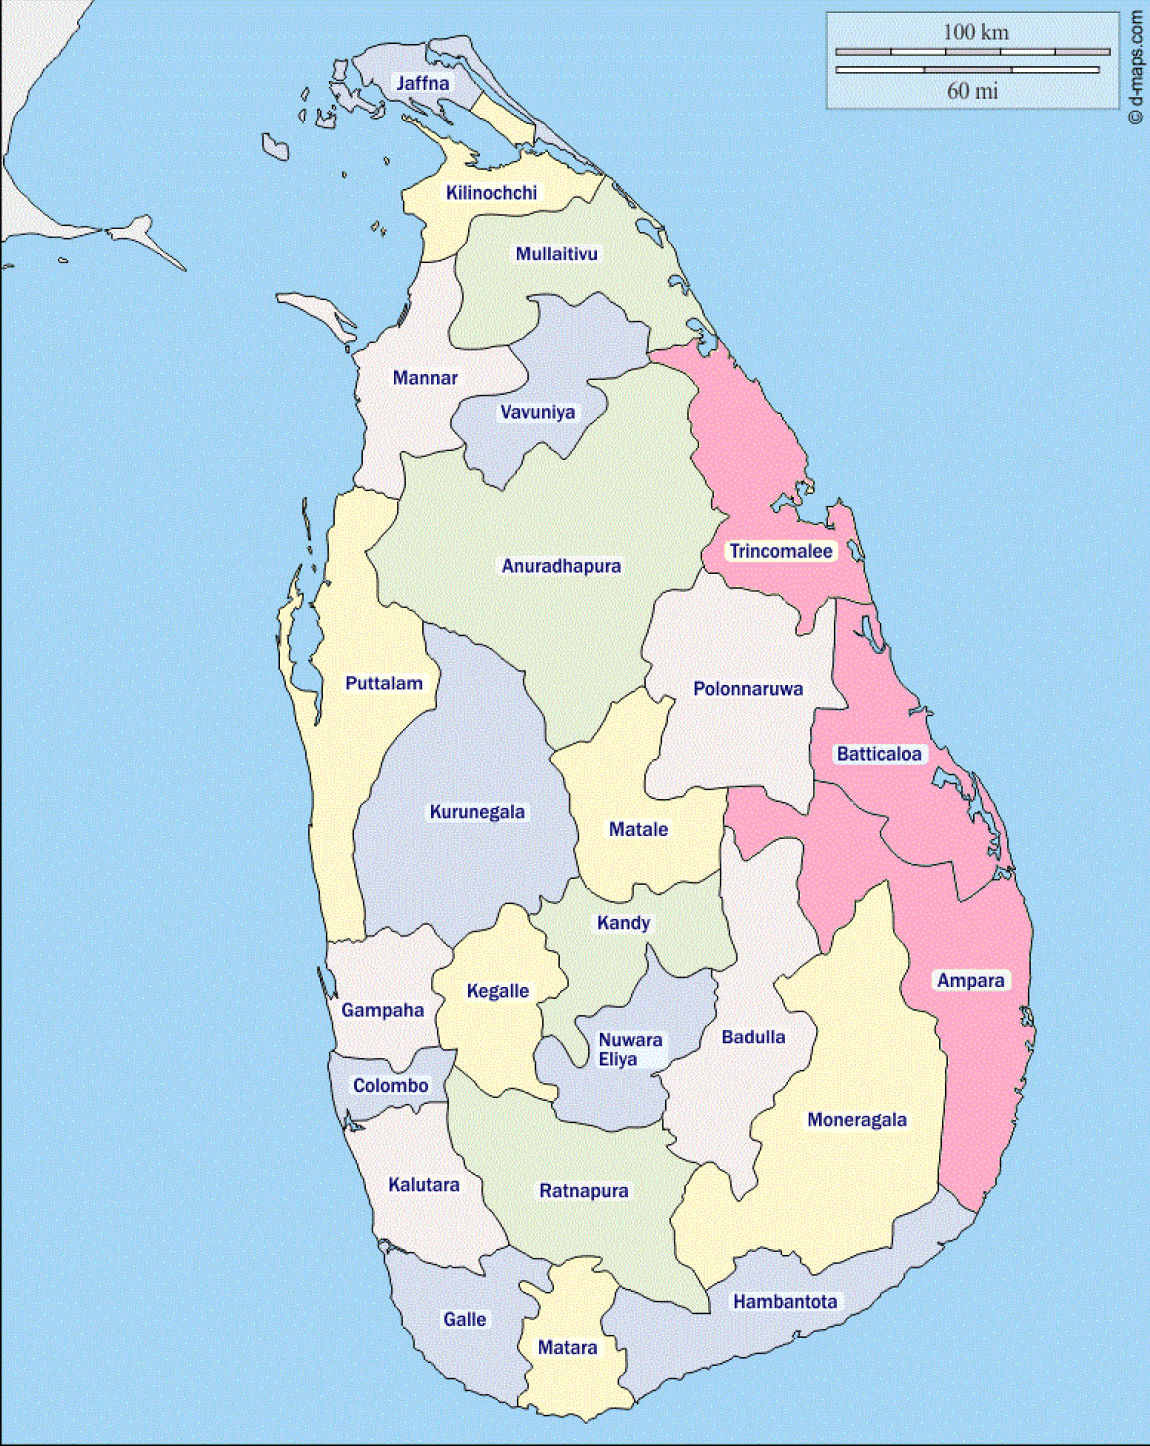 Figure 2 - Map of Eastern Province in Sri Lanka